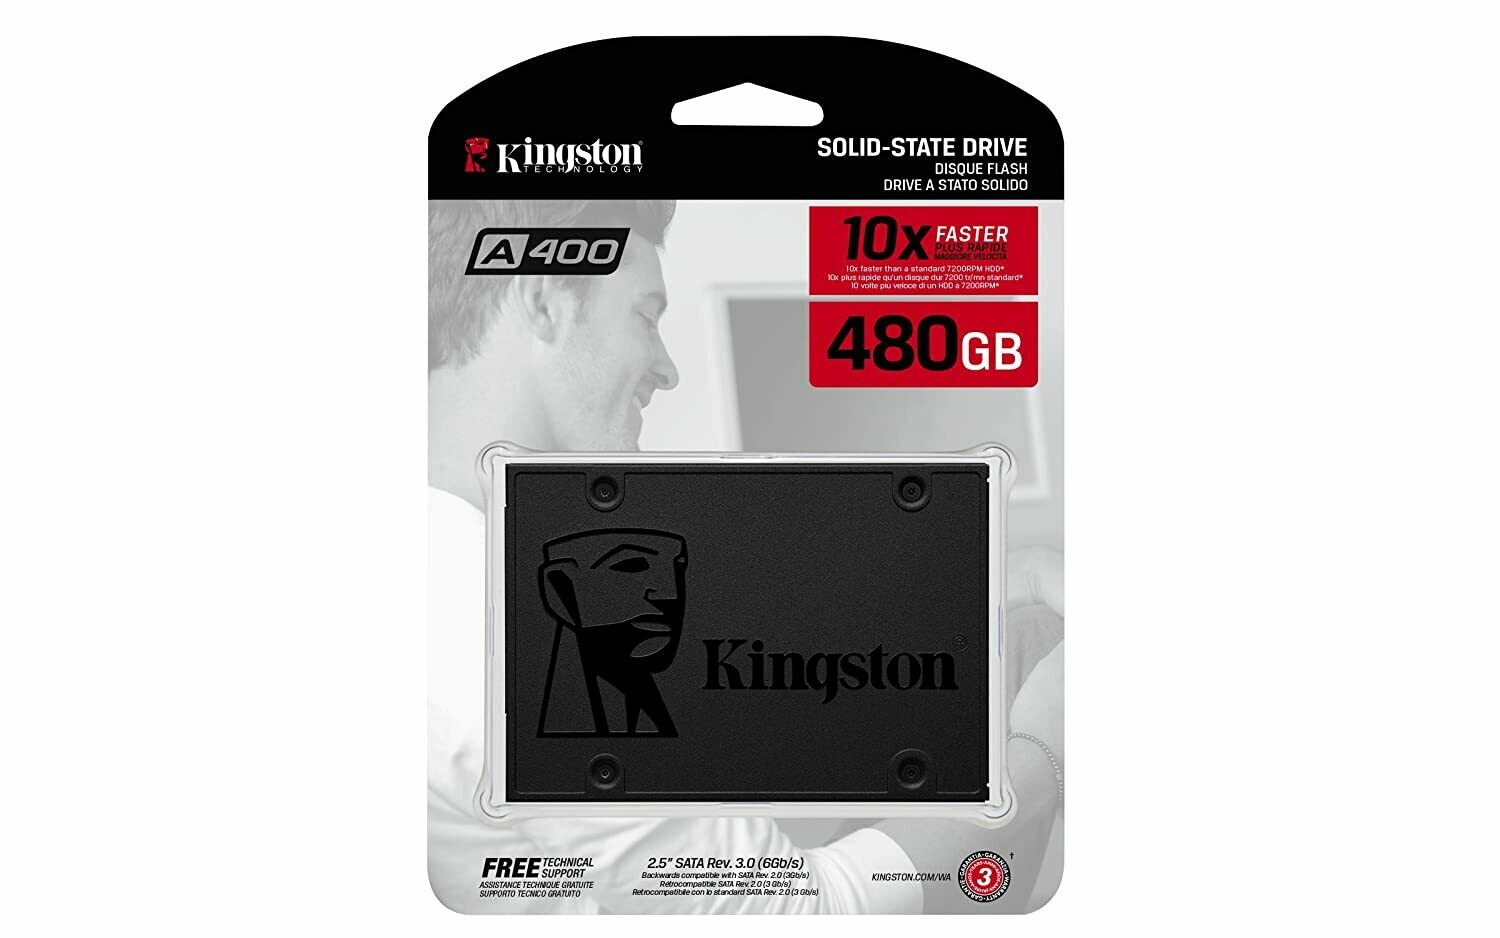 Kingston a400 480gb ssd for laptop 2.5